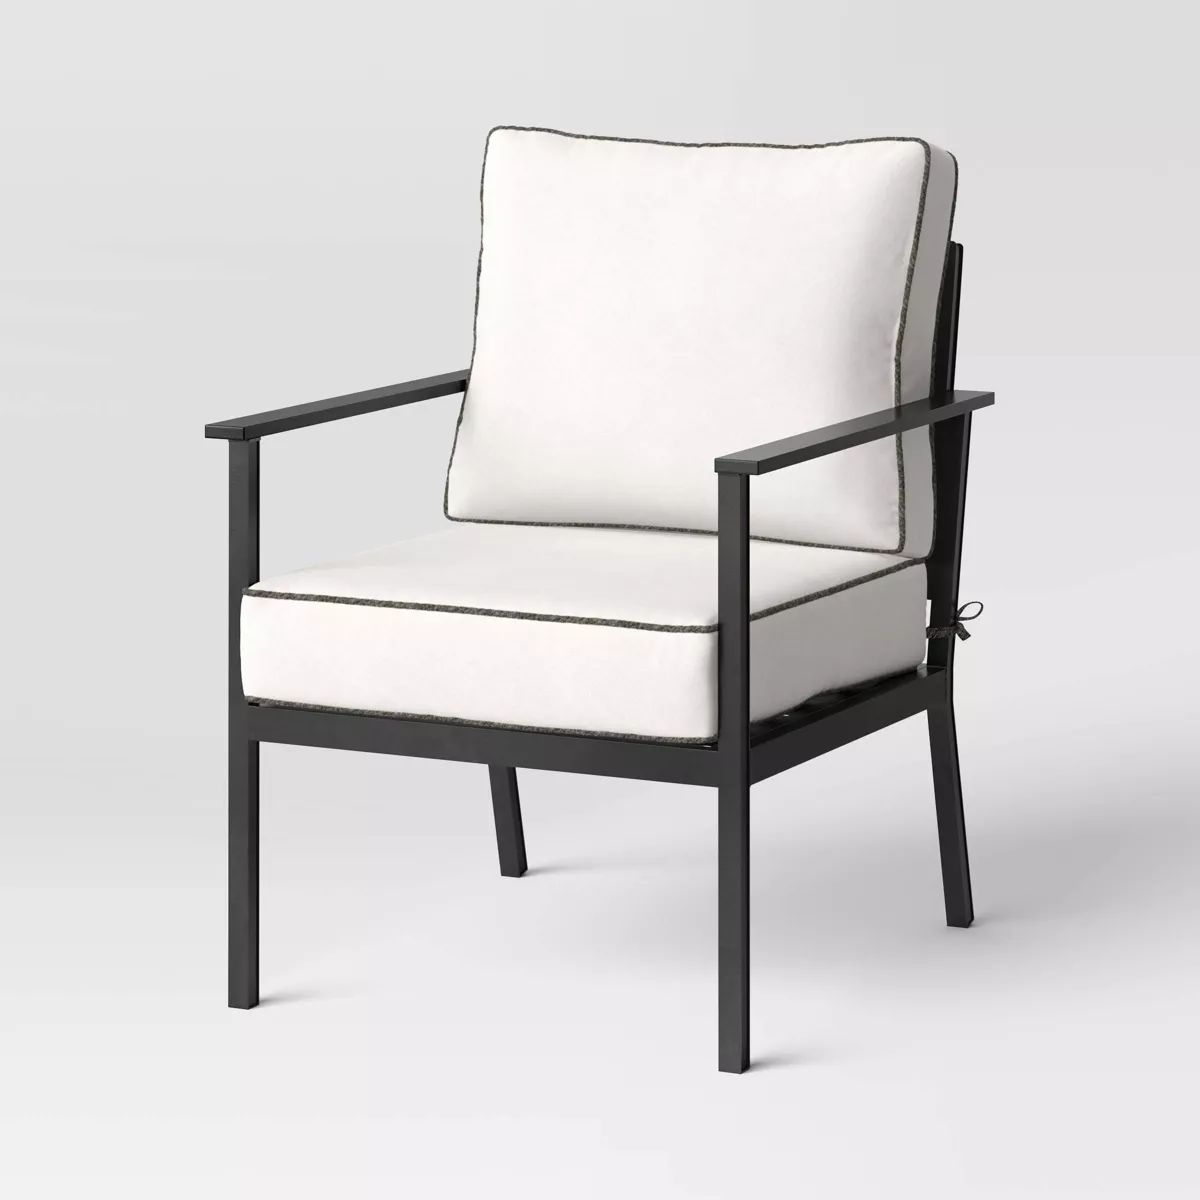 Searsburg Aluminum Deep Seating Outdoor Patio Chair, Club Chairs Black - Threshold™ | Target